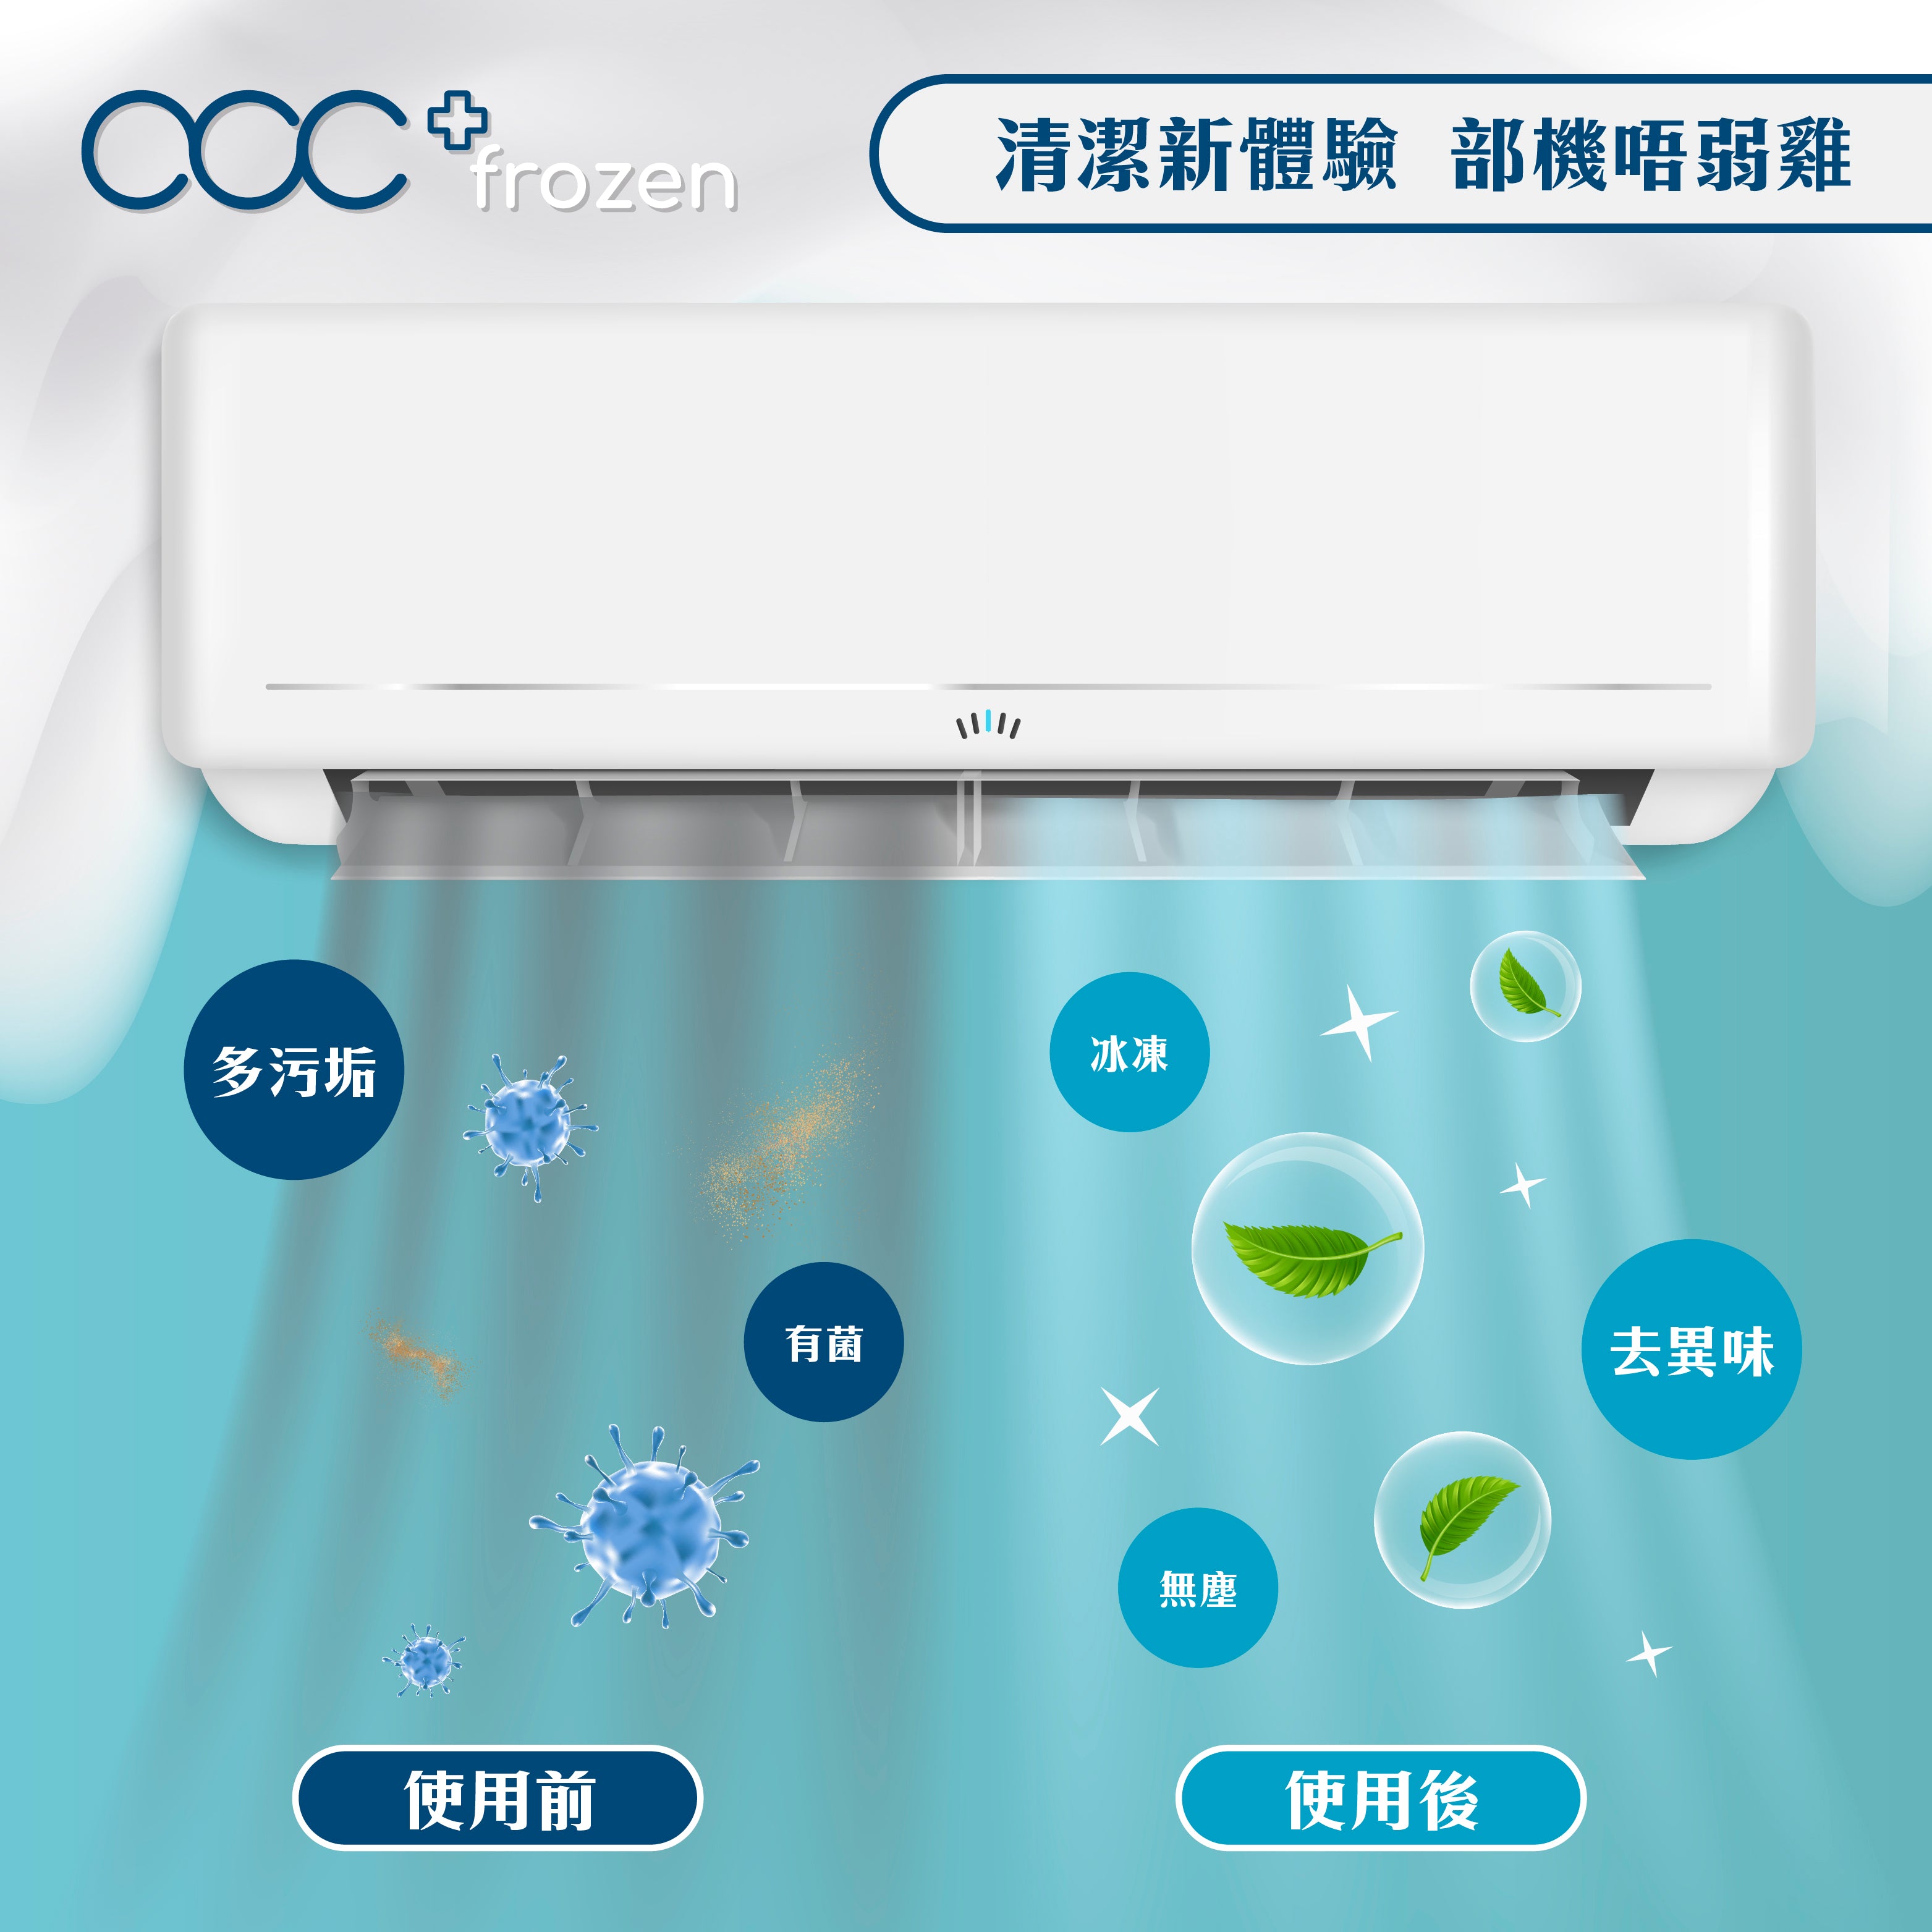 acc+ frozen 冷氣爆泡劑 實惠有售